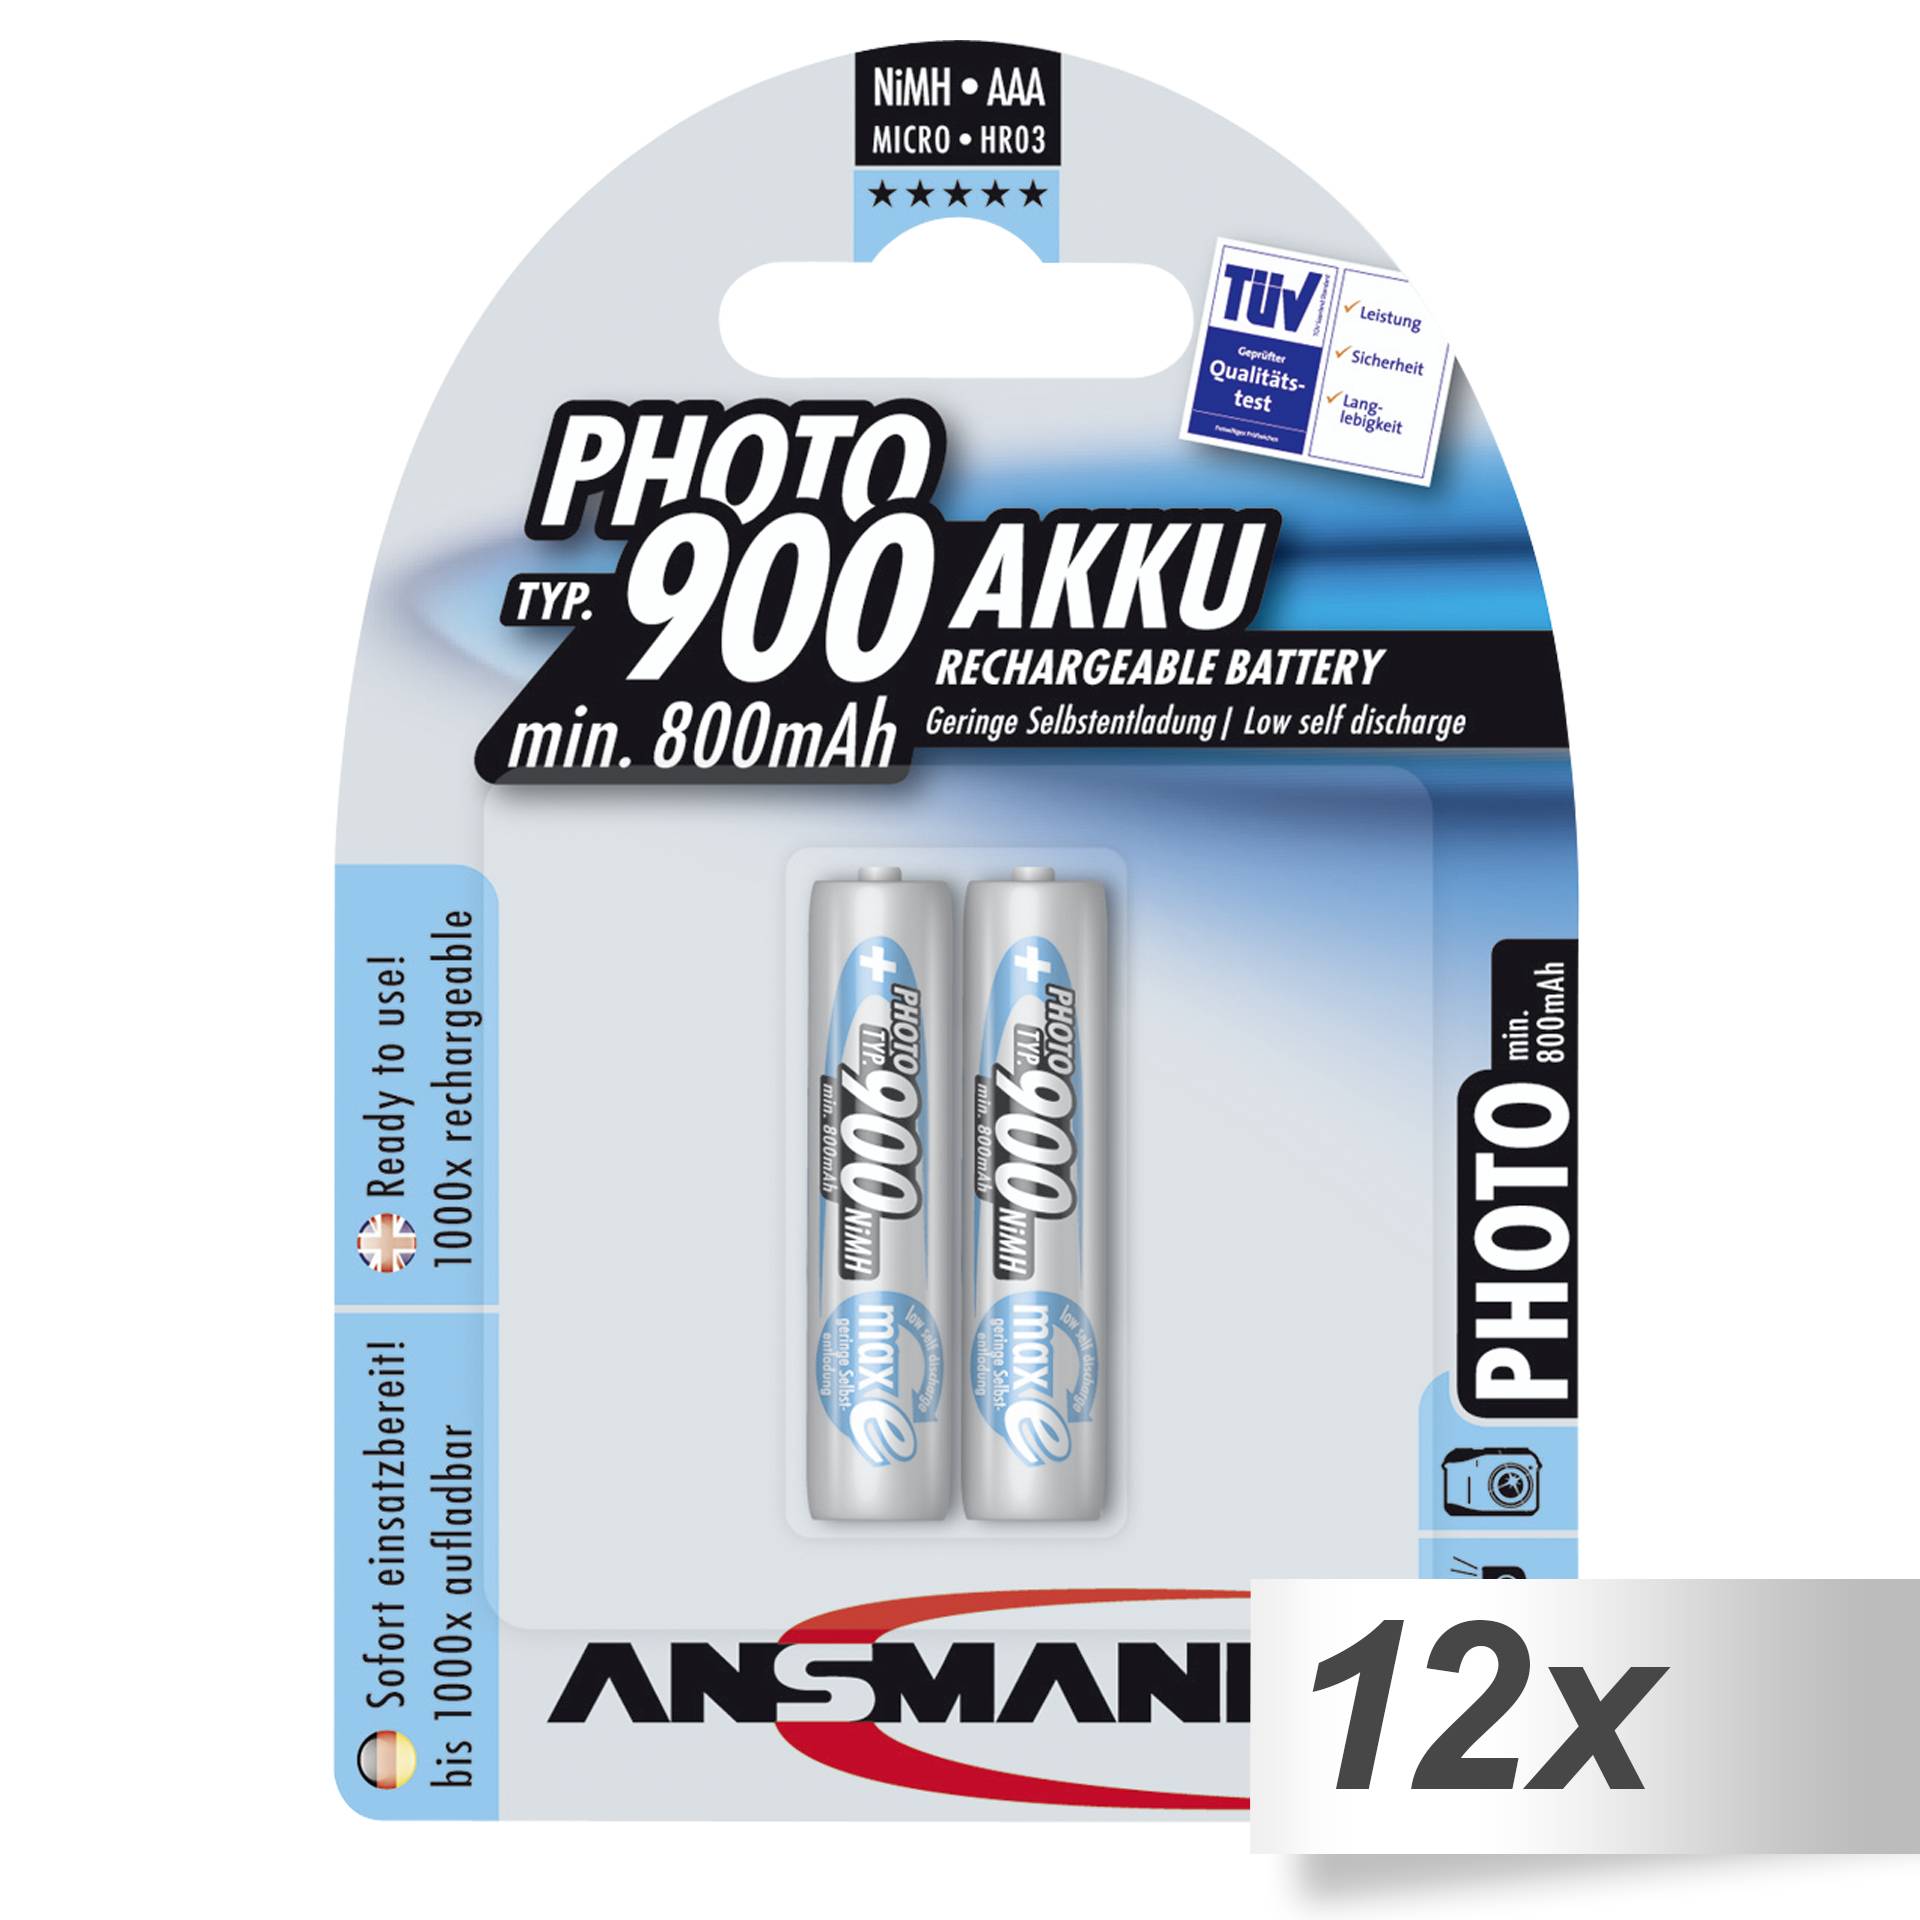 12x2 Ansmann maxE NiMH batt. 900 Micro AAA 800 mAh PHOTO